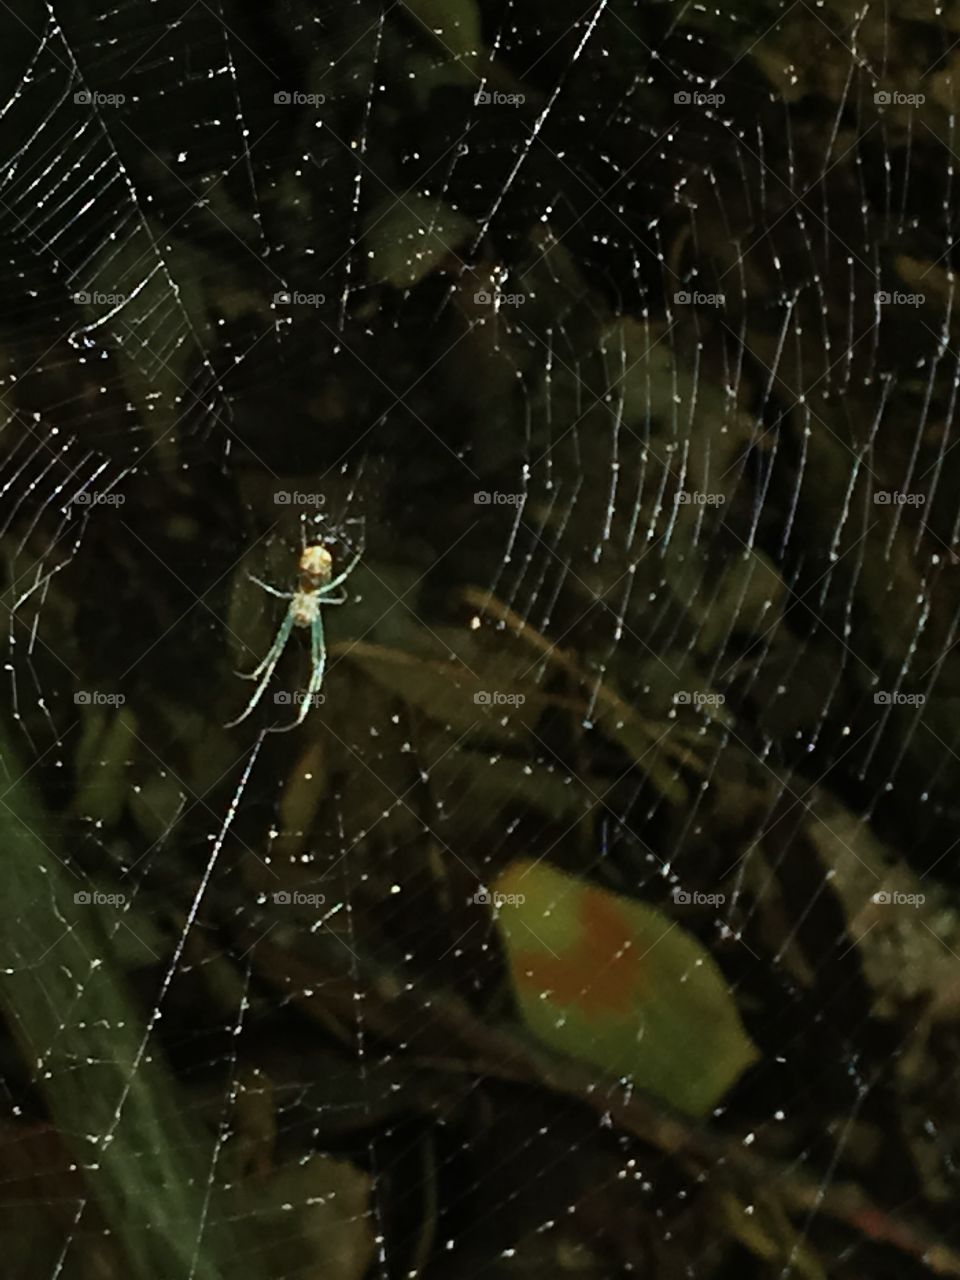 Greenish Spider in its web